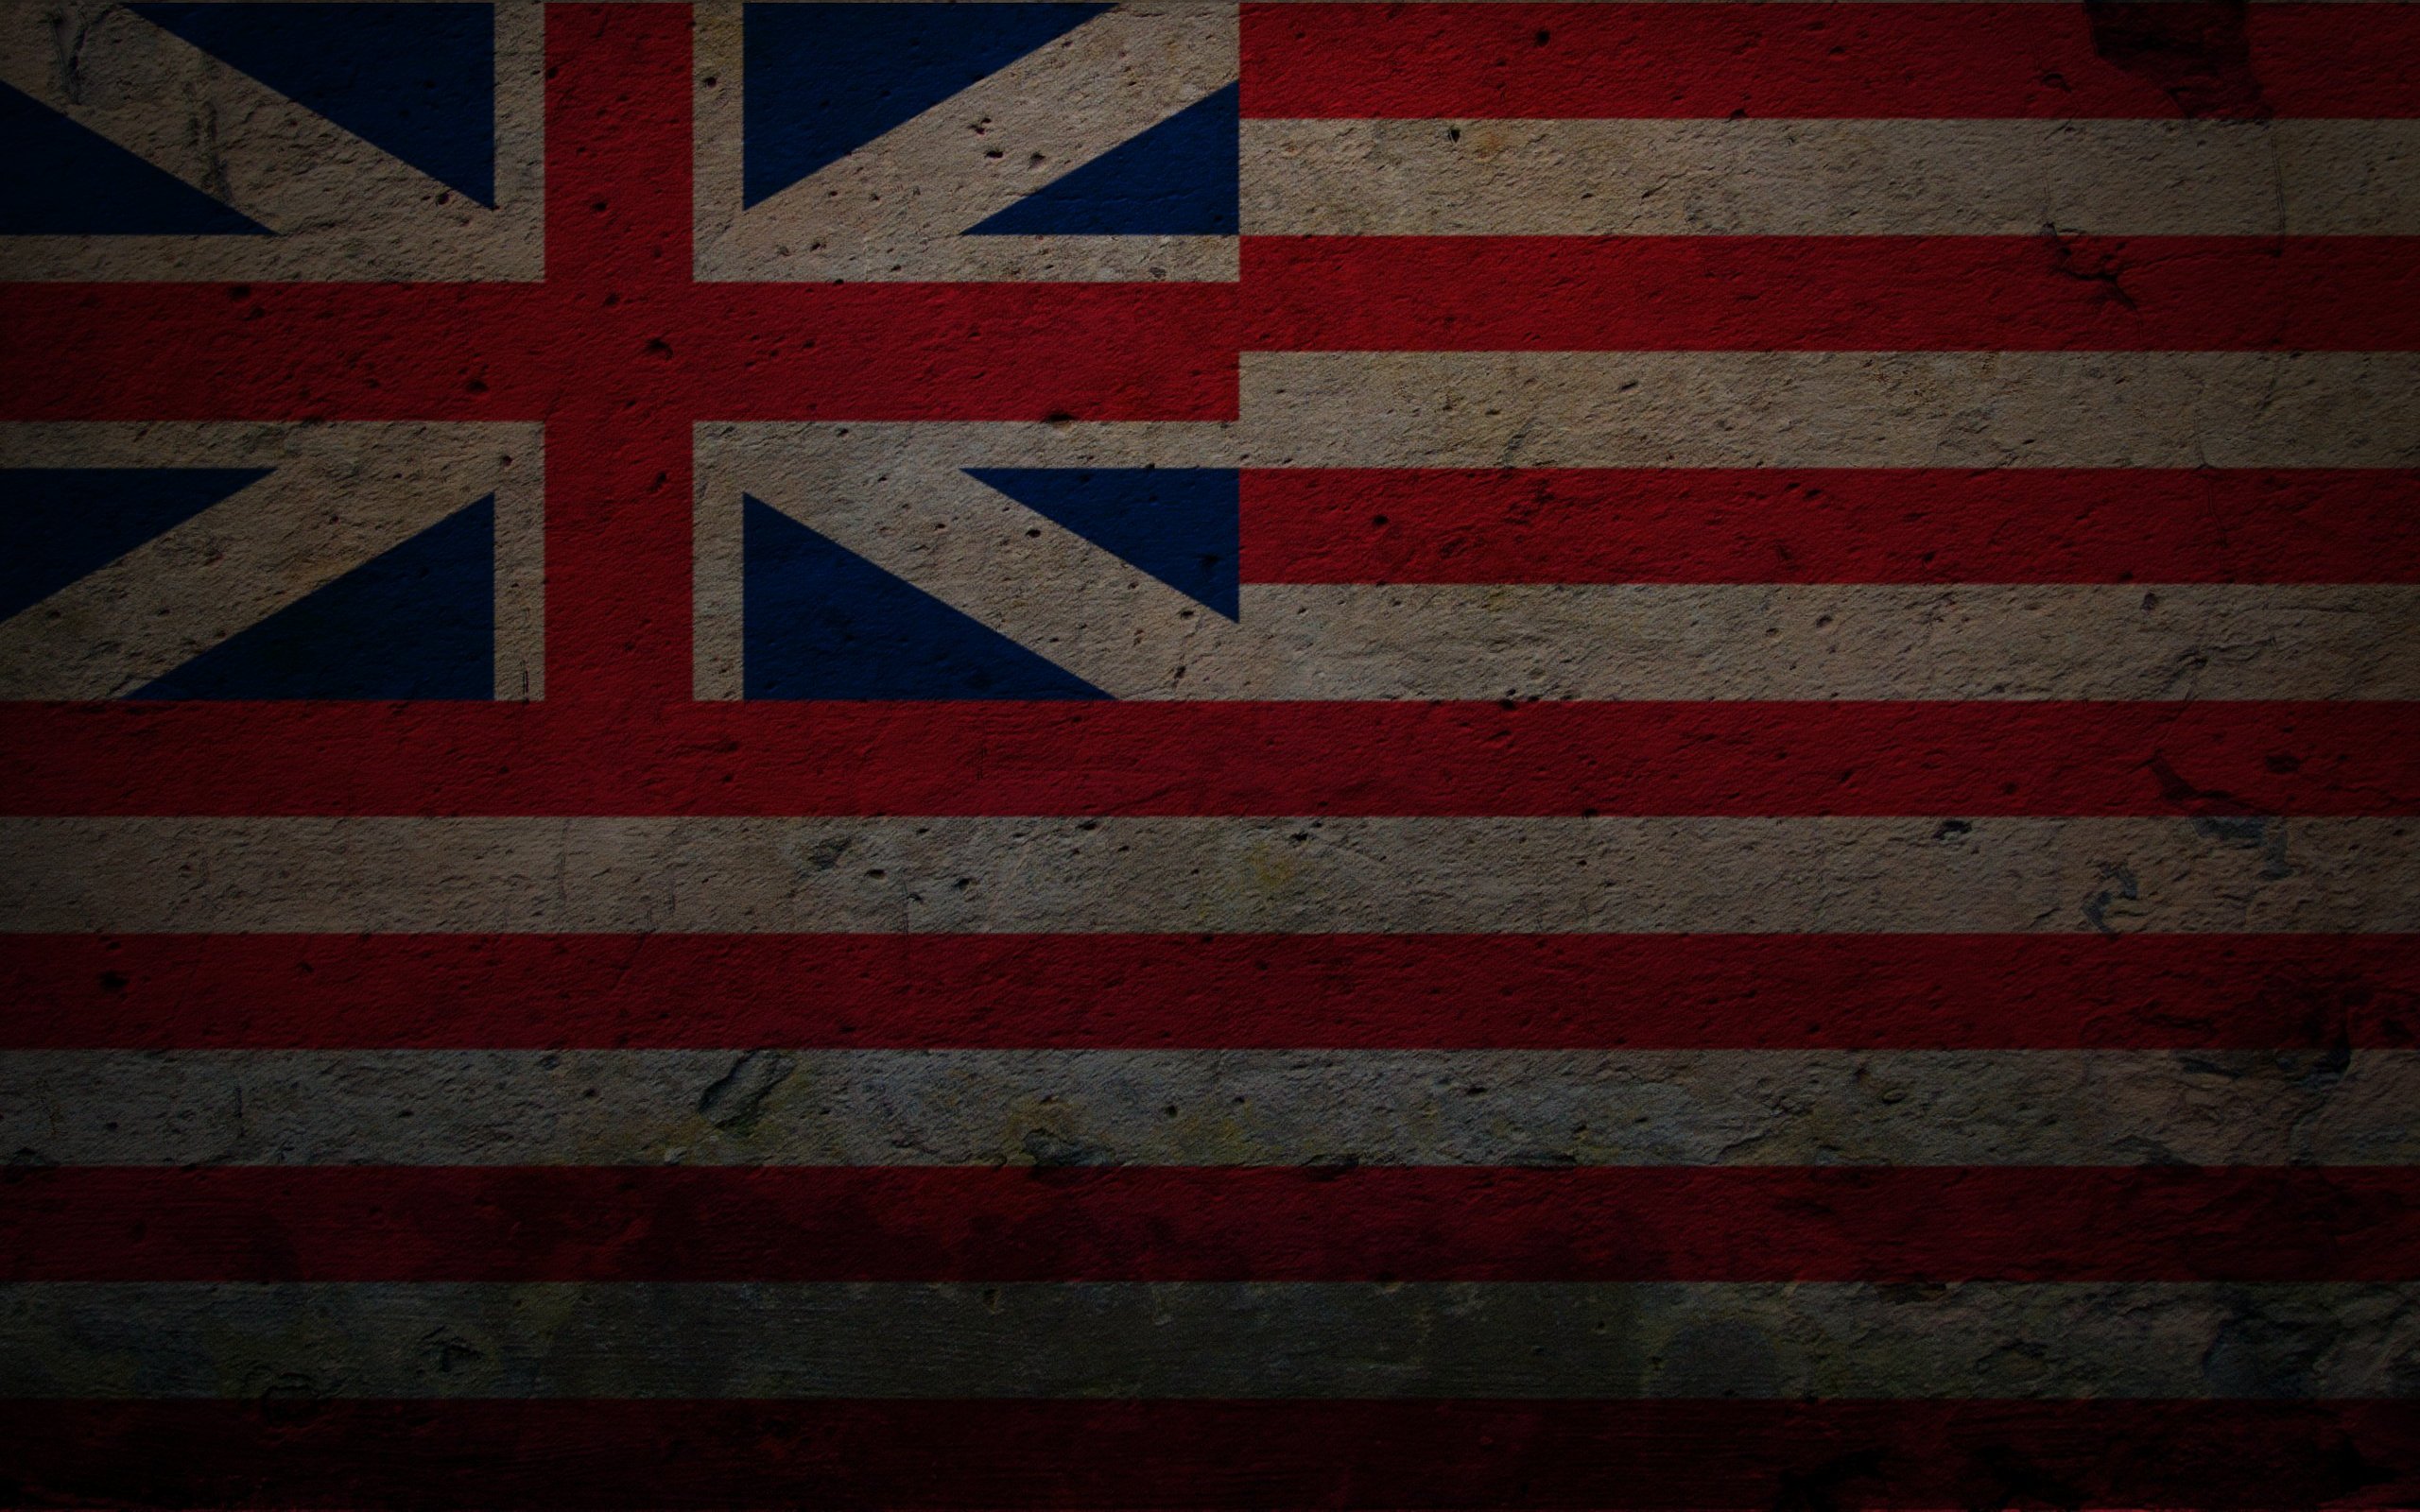 flags, USA, United Kingdom - desktop wallpaper